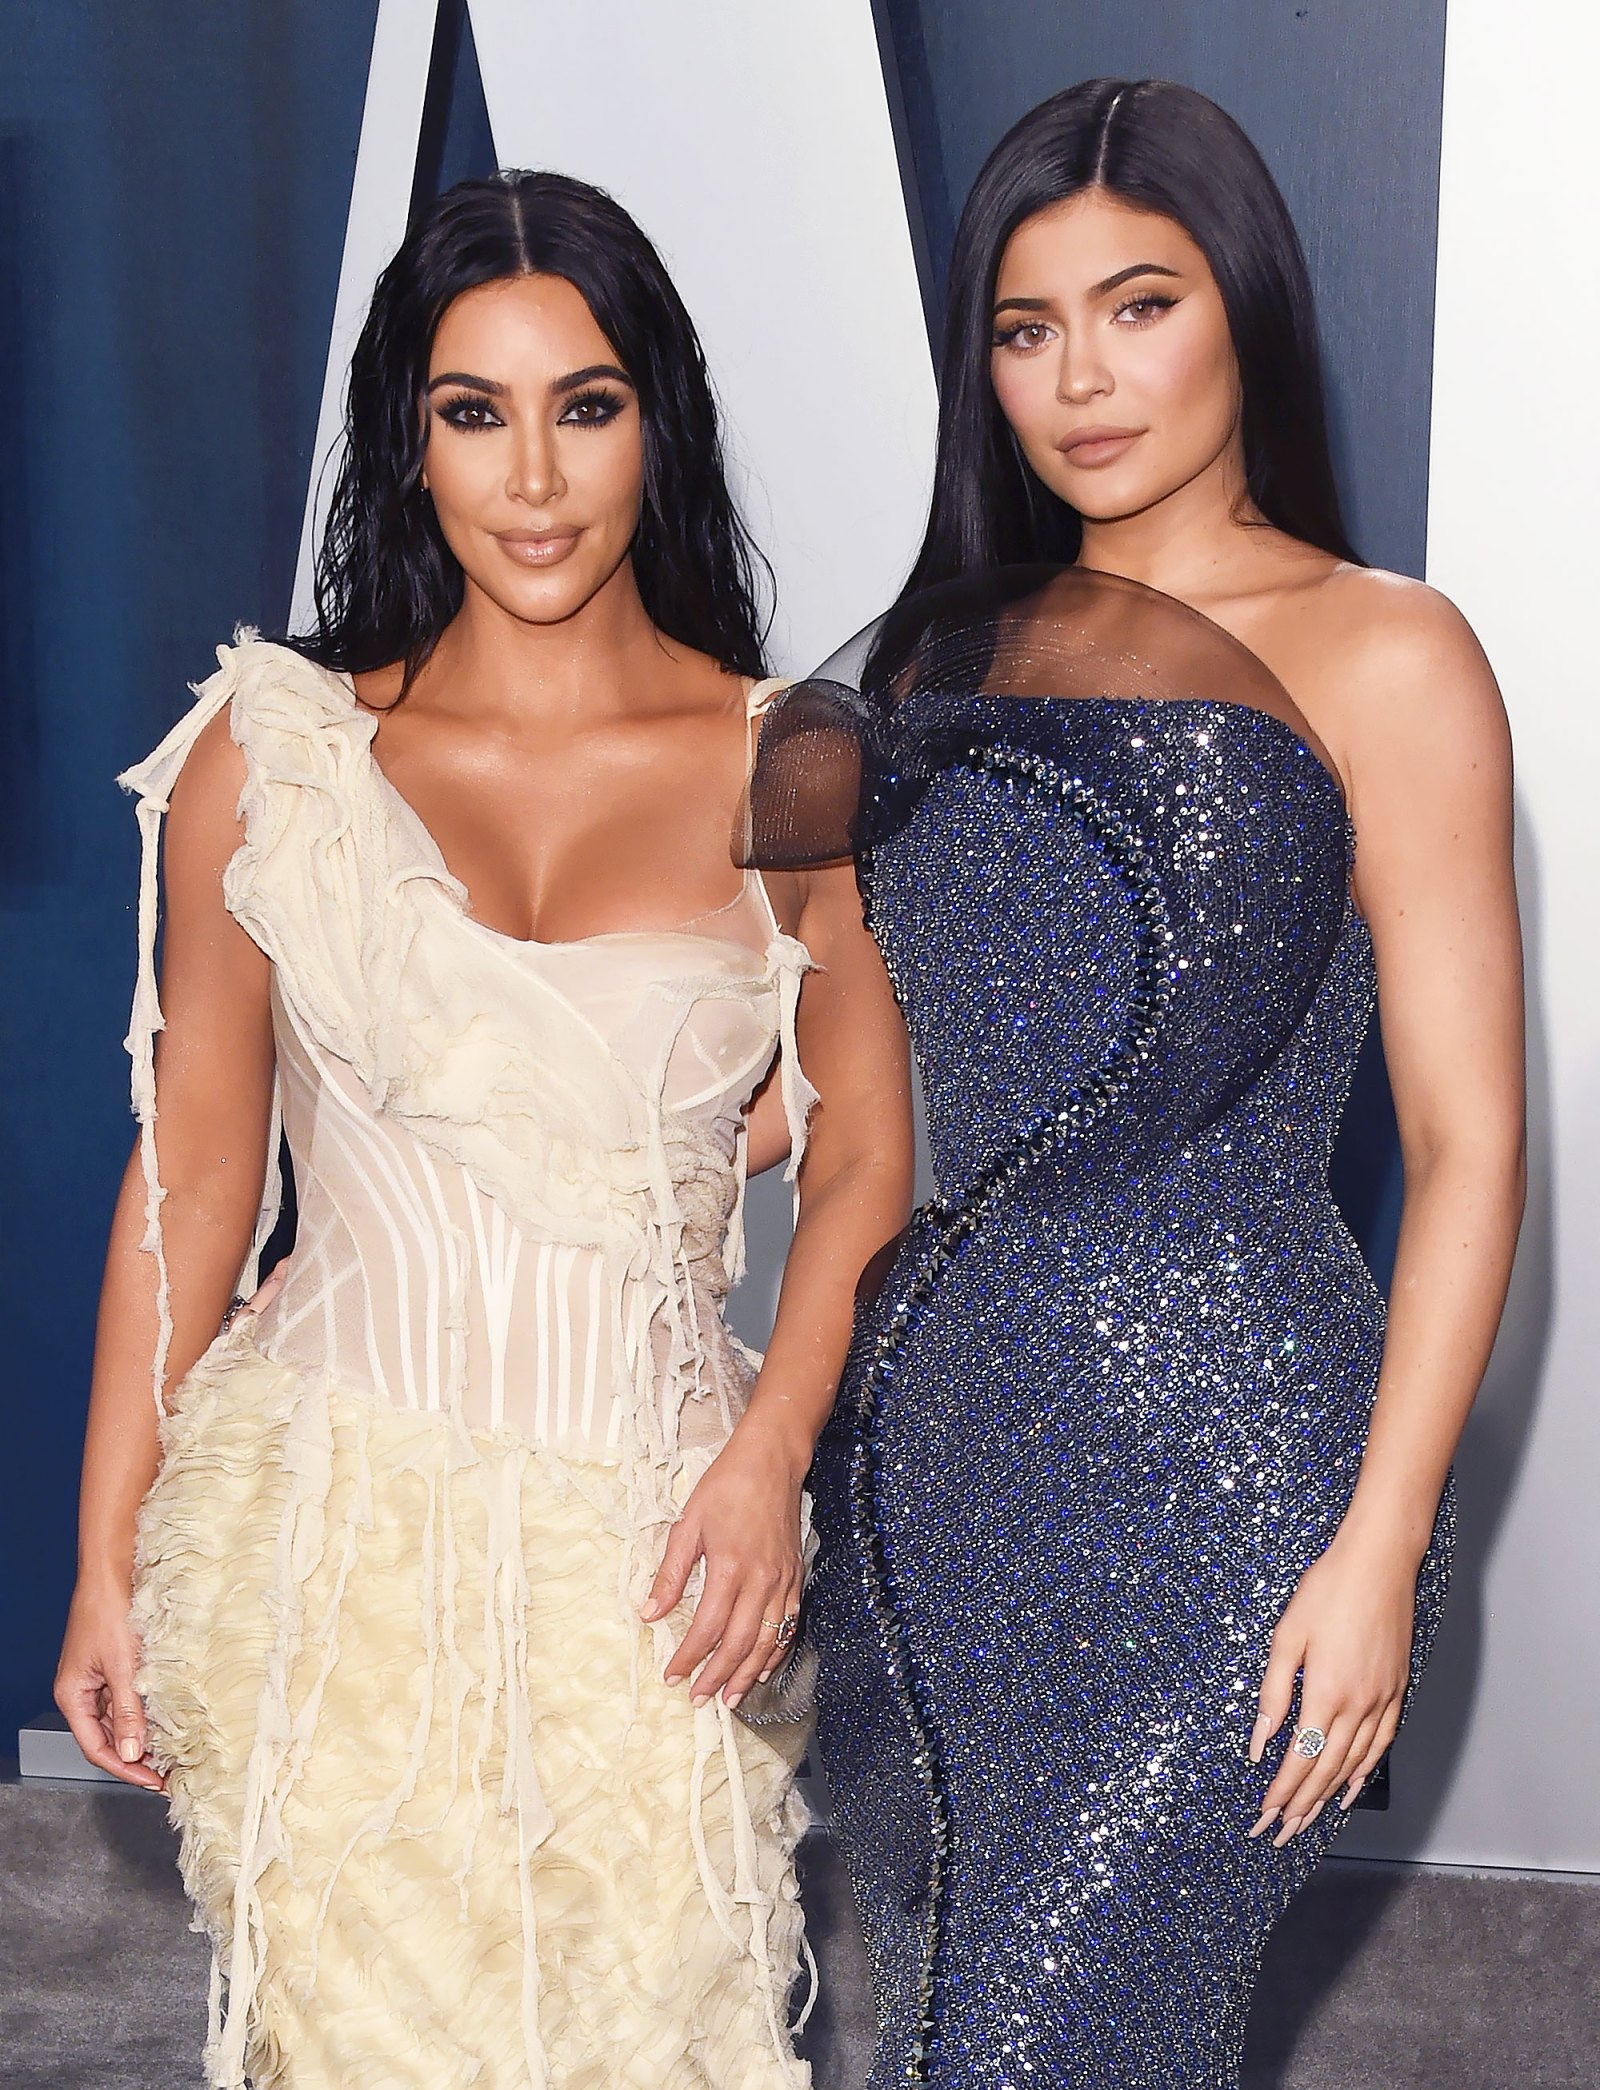 Kim Kardashian and Kylie Jenner at Vanity Fair's 2020 Oscar Party